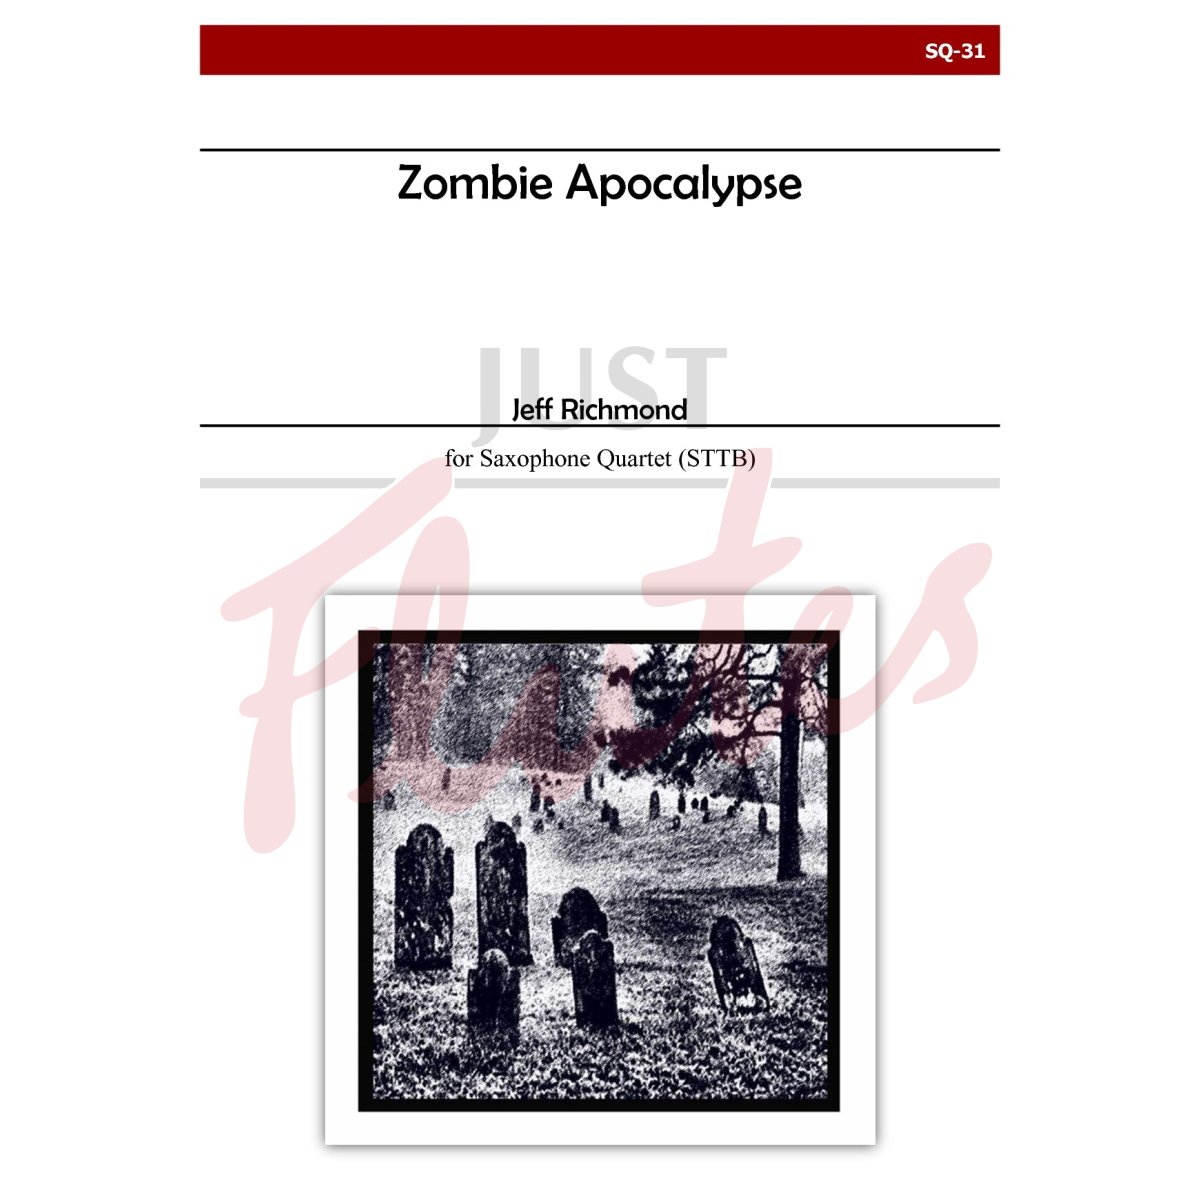 Zombie Apocalypse for Saxophone Quartet